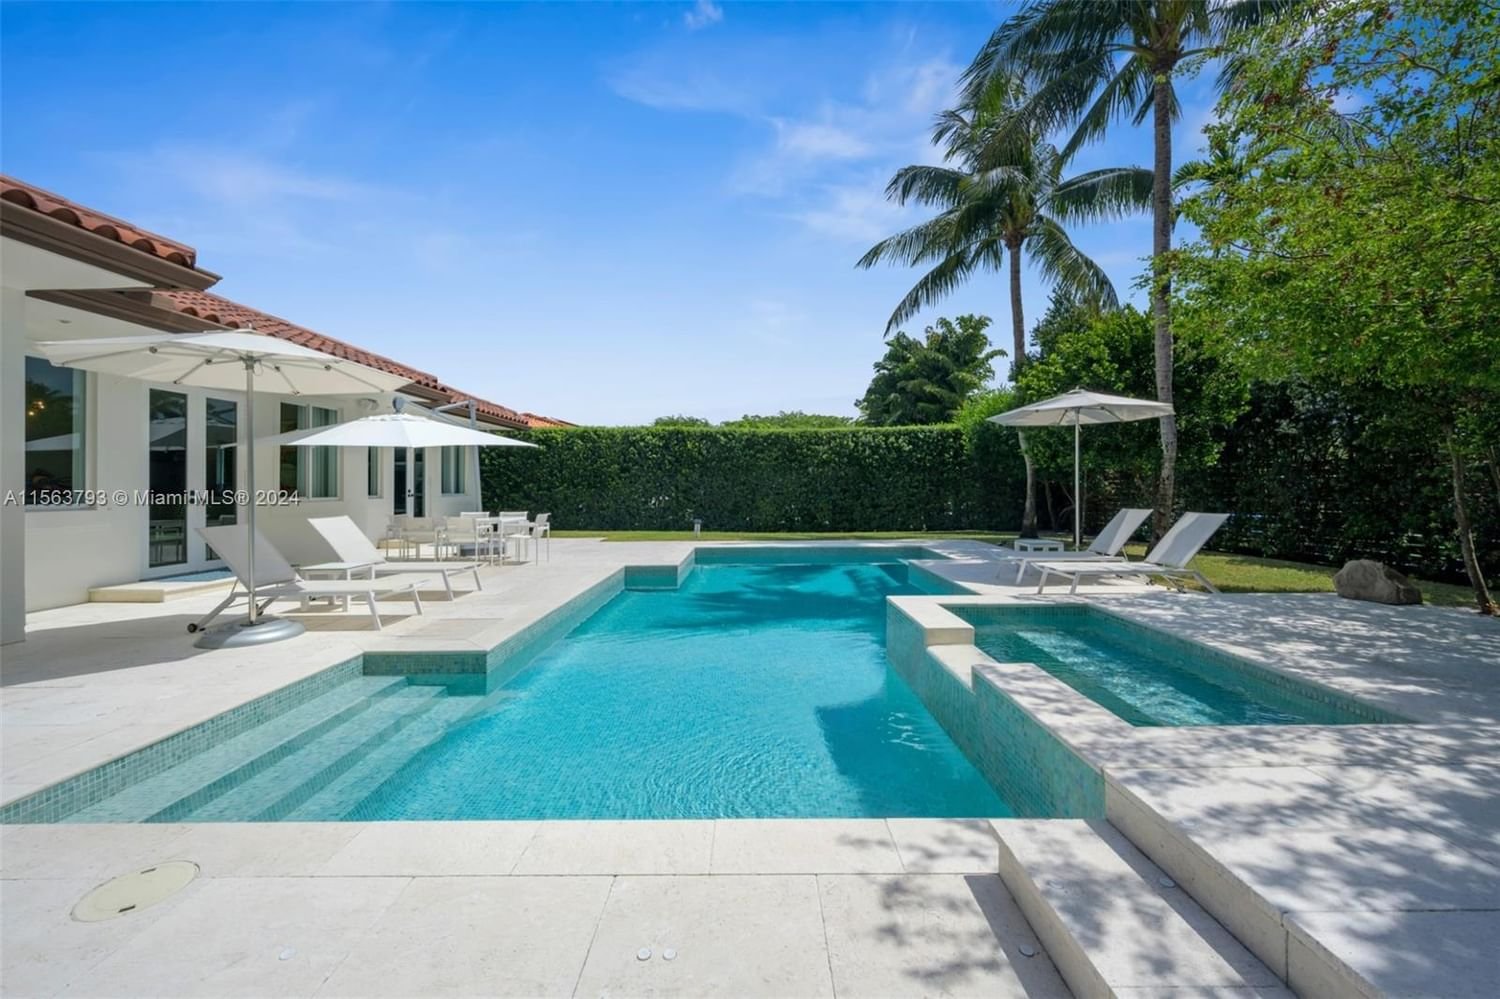 Real estate property located at 636 Melaleuca Ln, Miami-Dade County, BAY POINT, Miami, FL